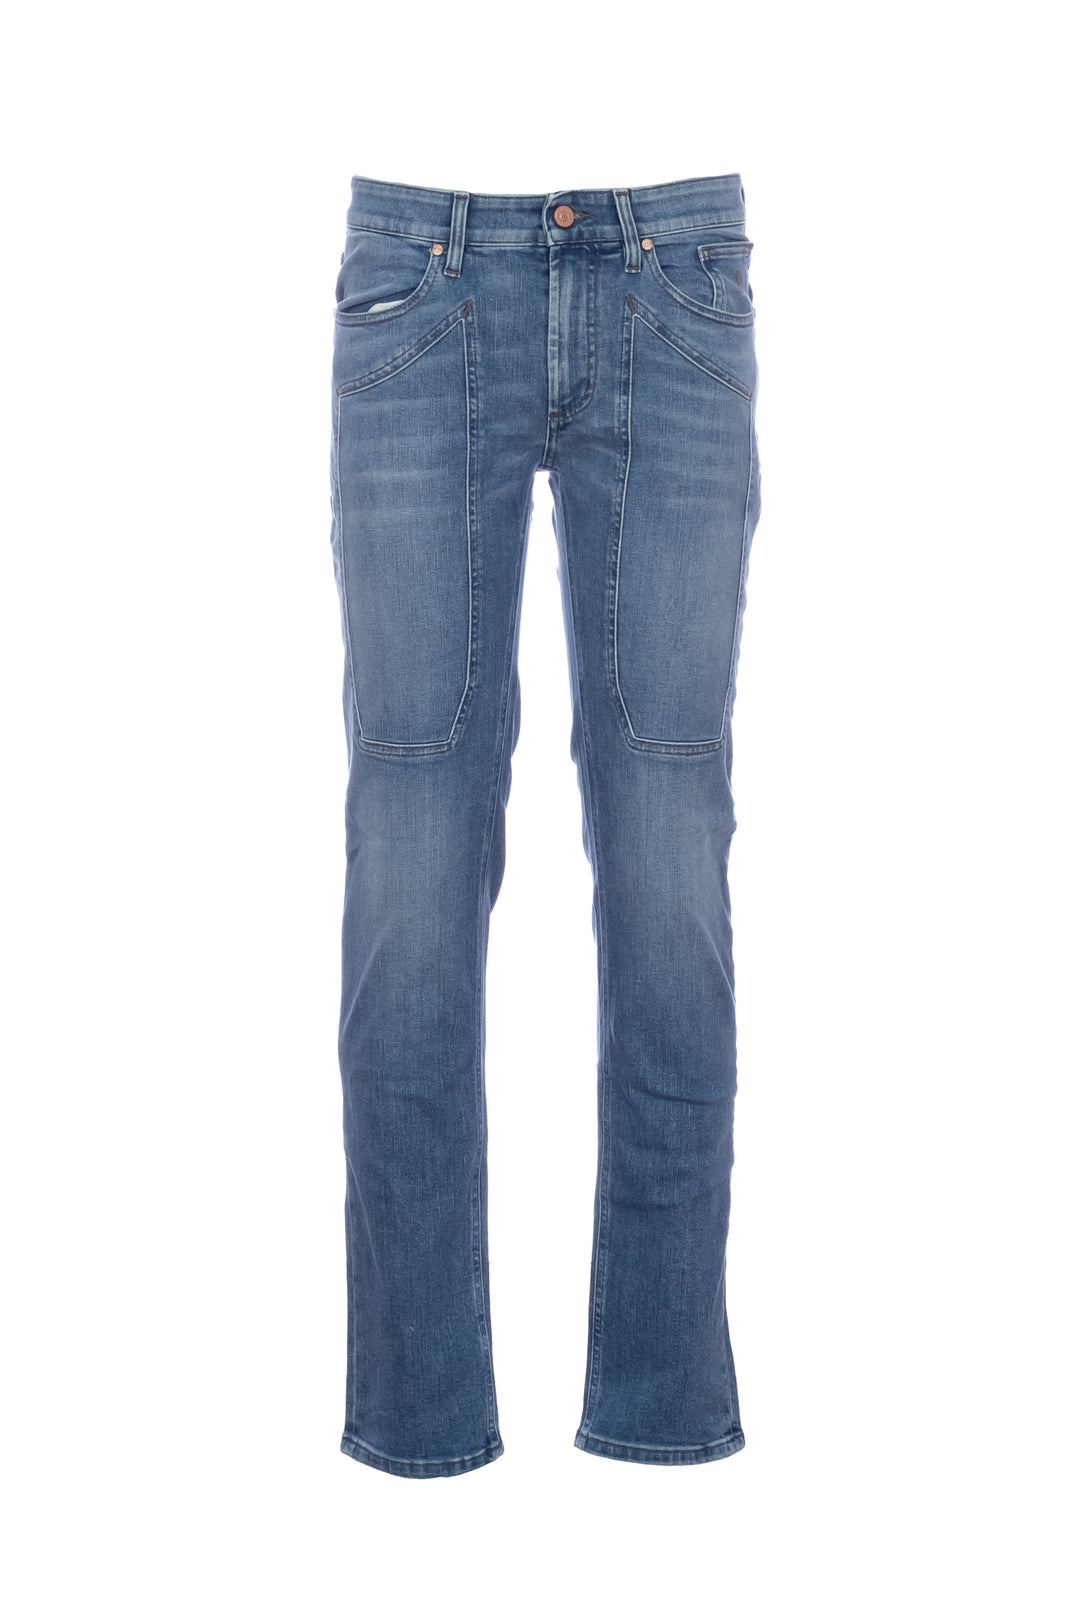 JECKERSON Jeans 5 tasche “JOHN” in denim stretch con toppa - Mancinelli 1954